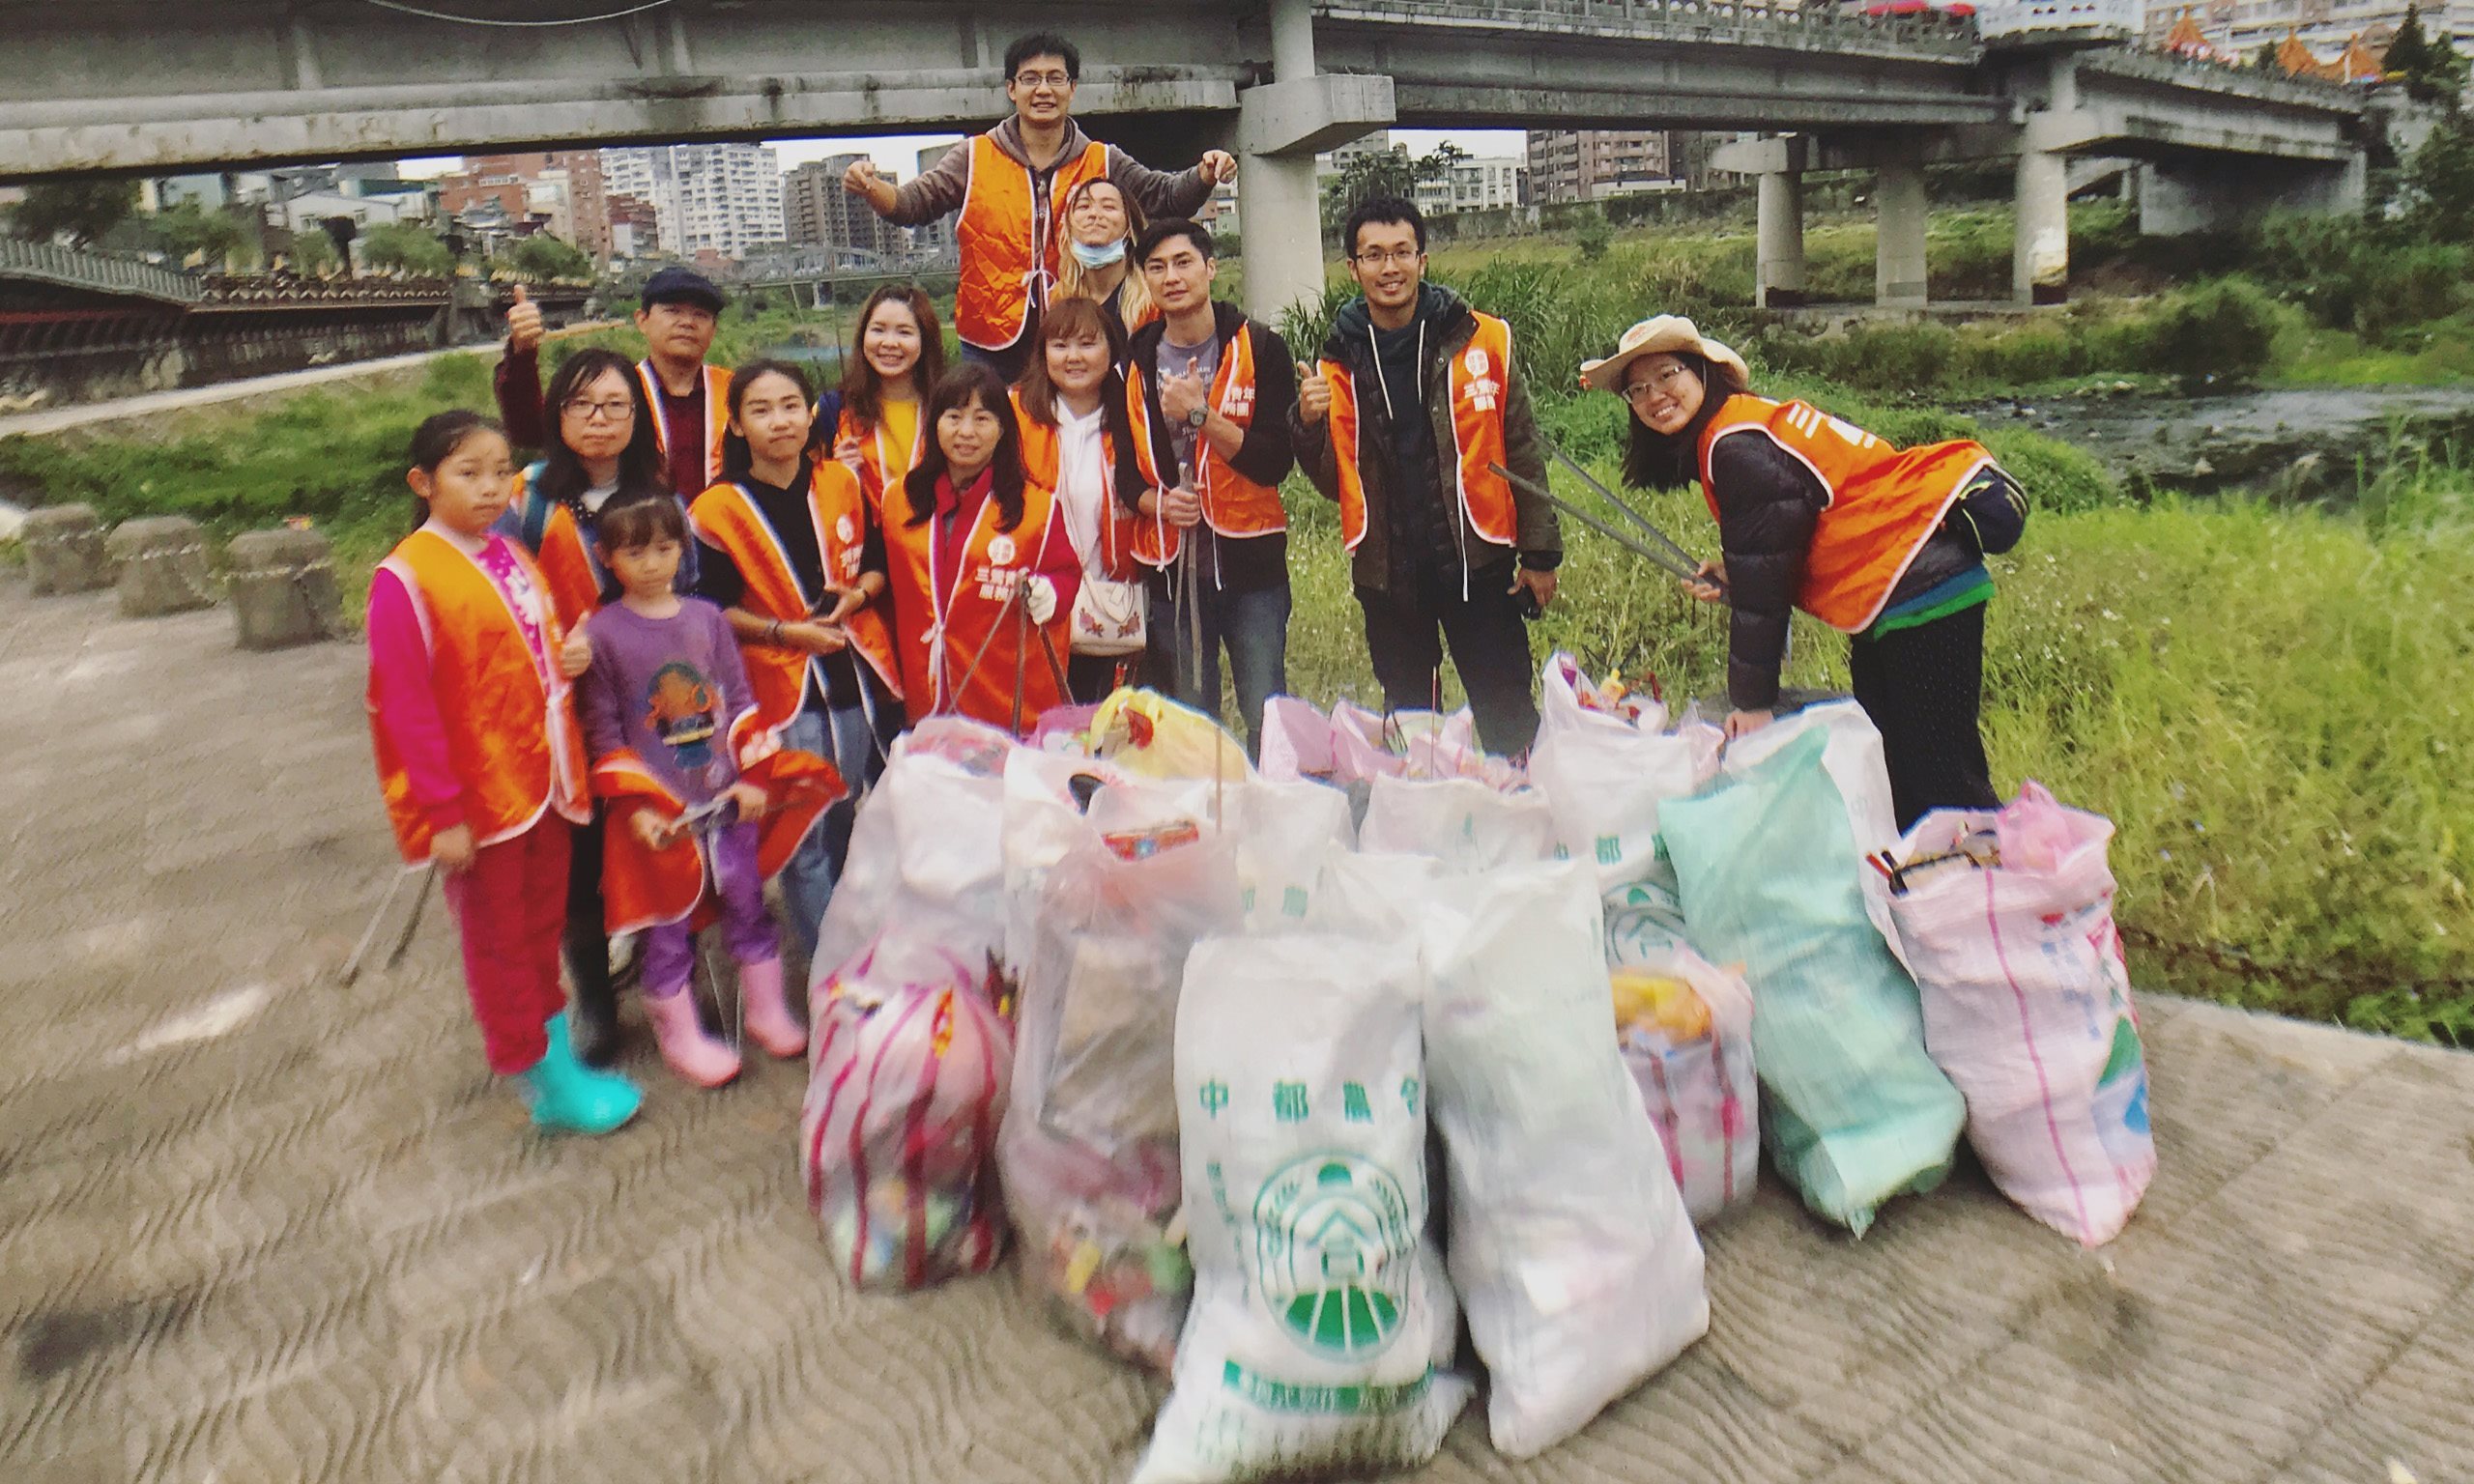 2019/02/10 River Clean-up Operation in Taiwan, Taipei Sanxia